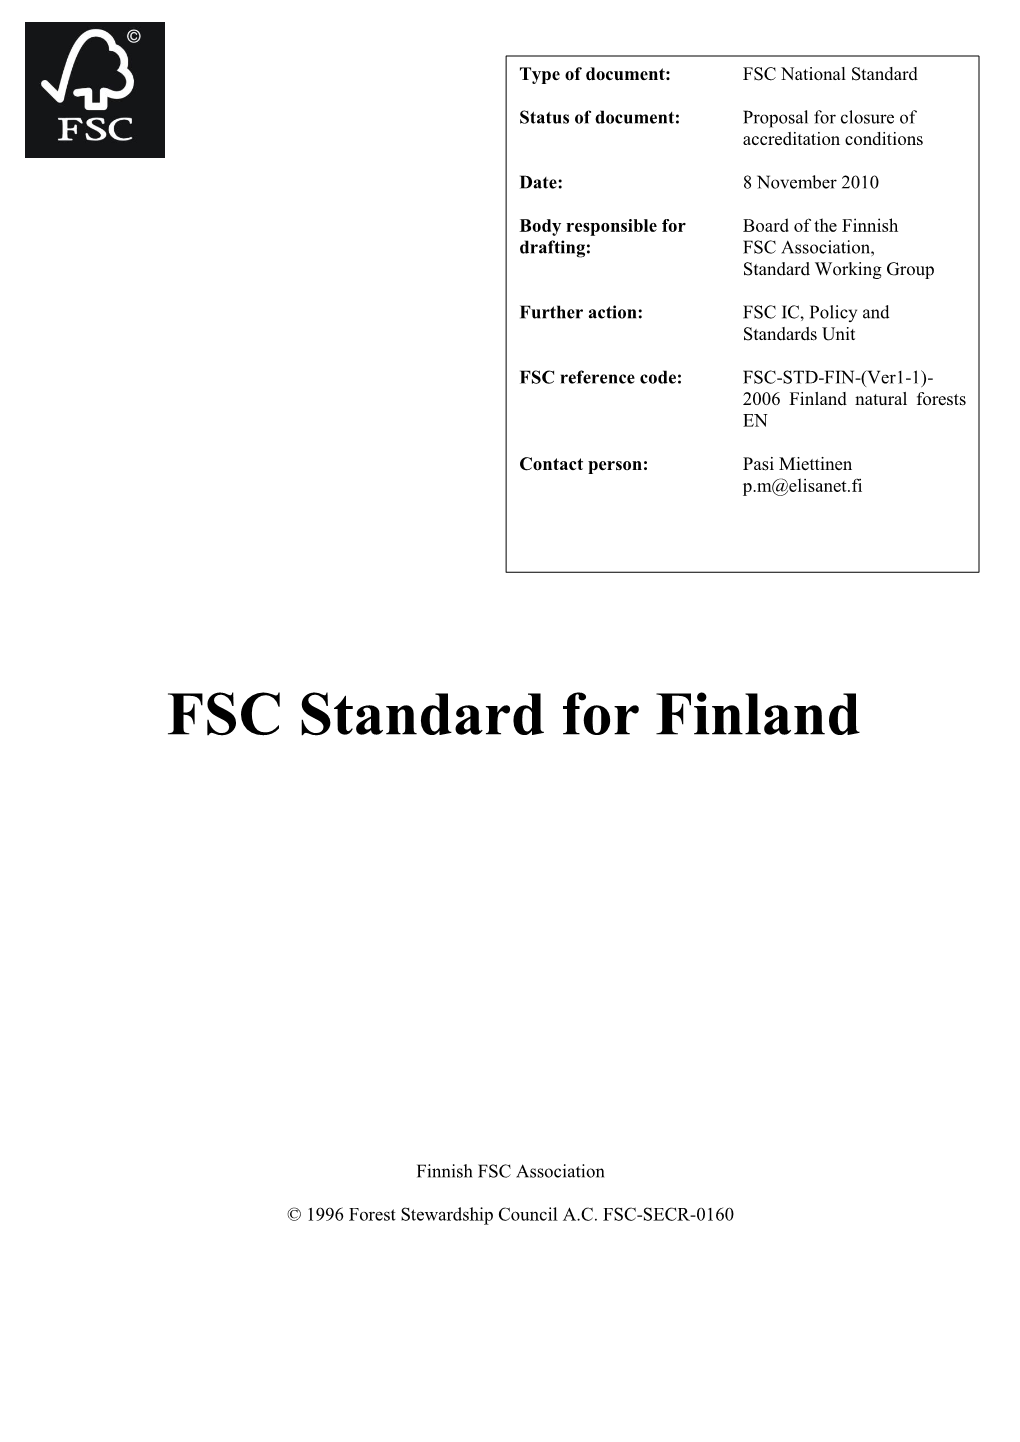 FSC Standard for Finland